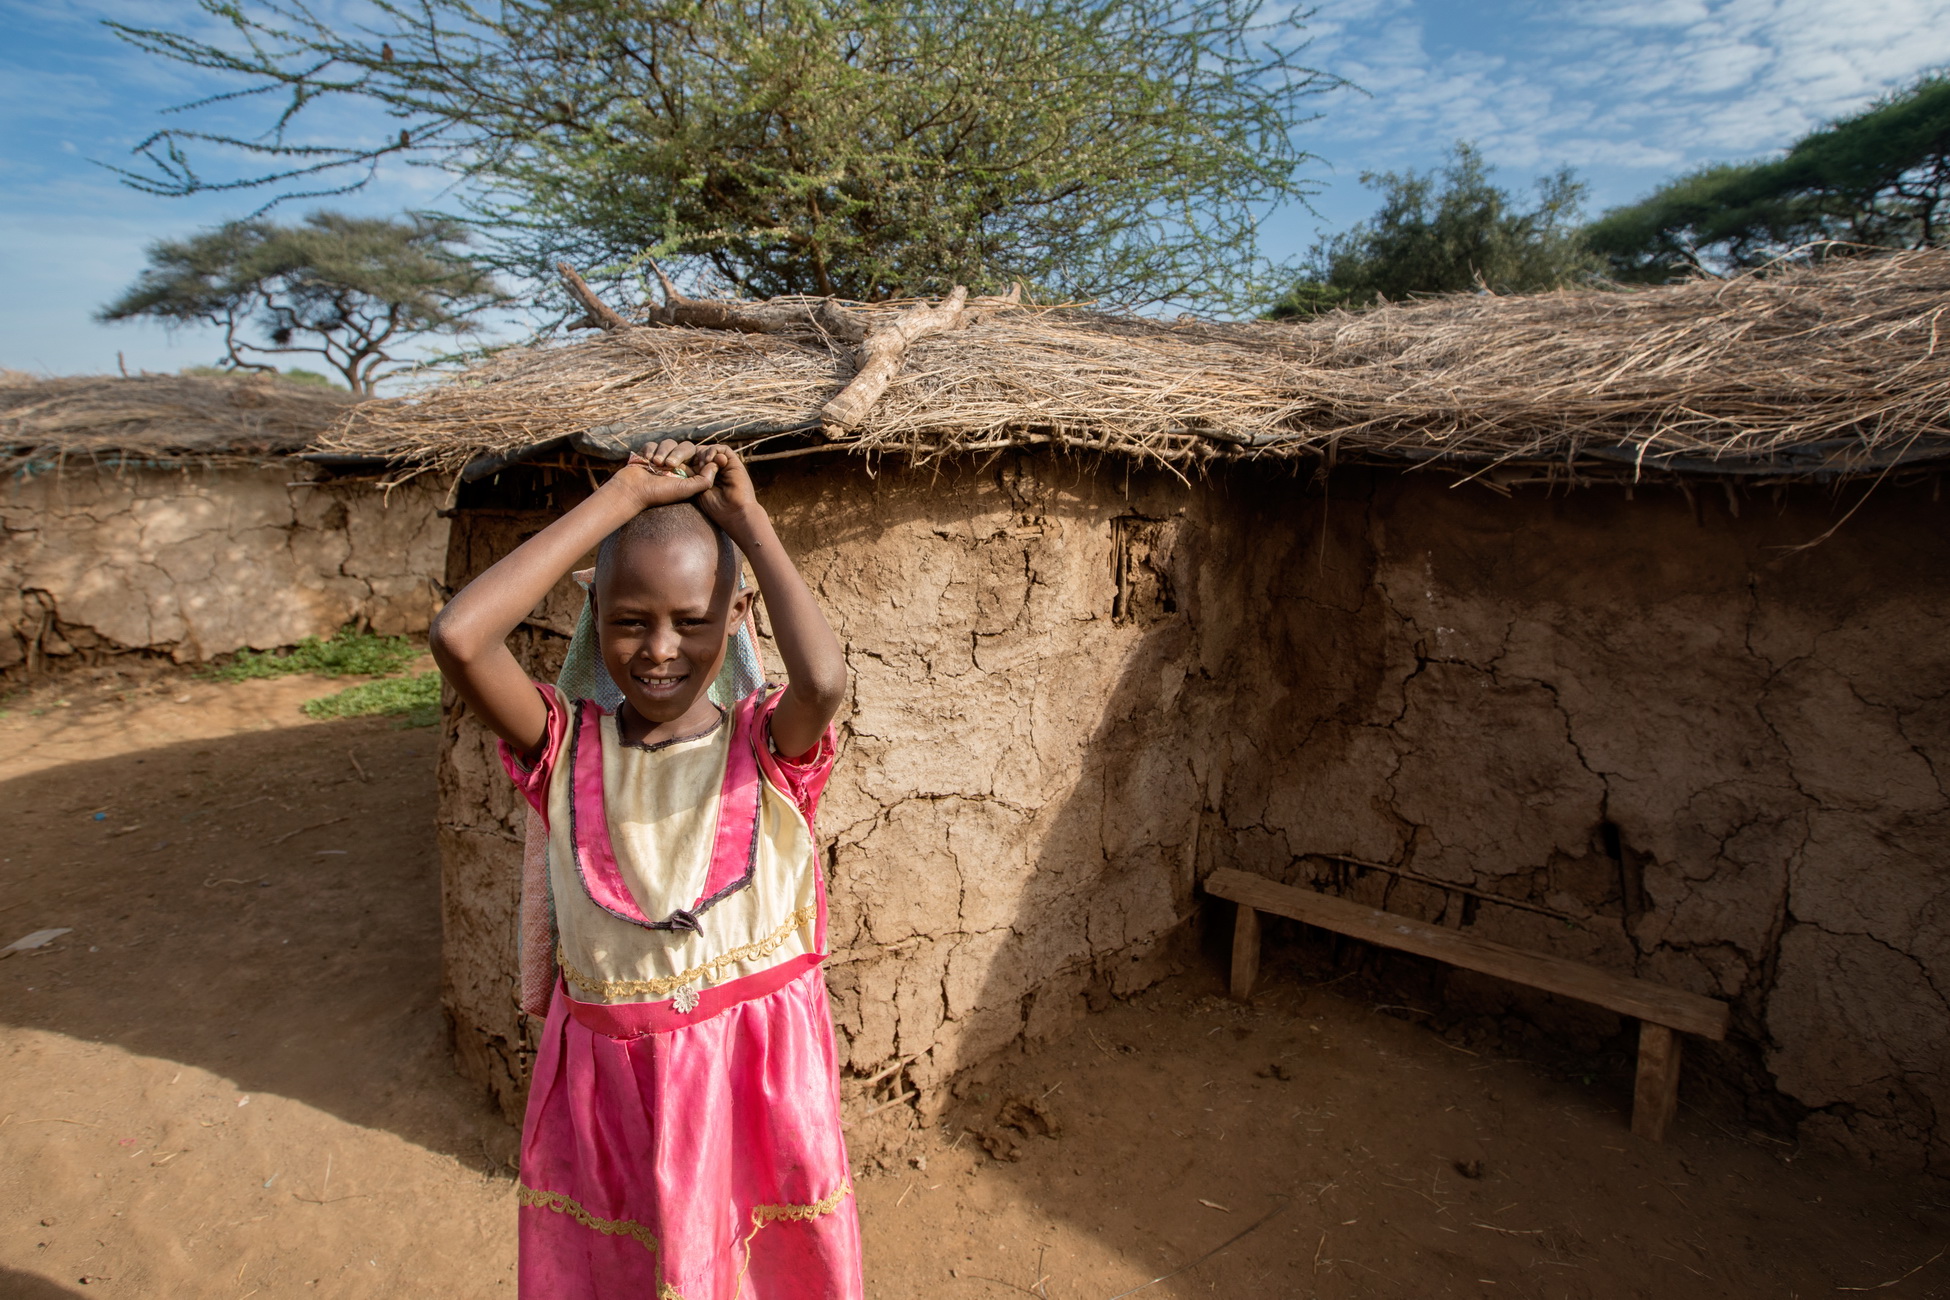 Masajská holčička, Martina Grmolenská - Planeta lidí